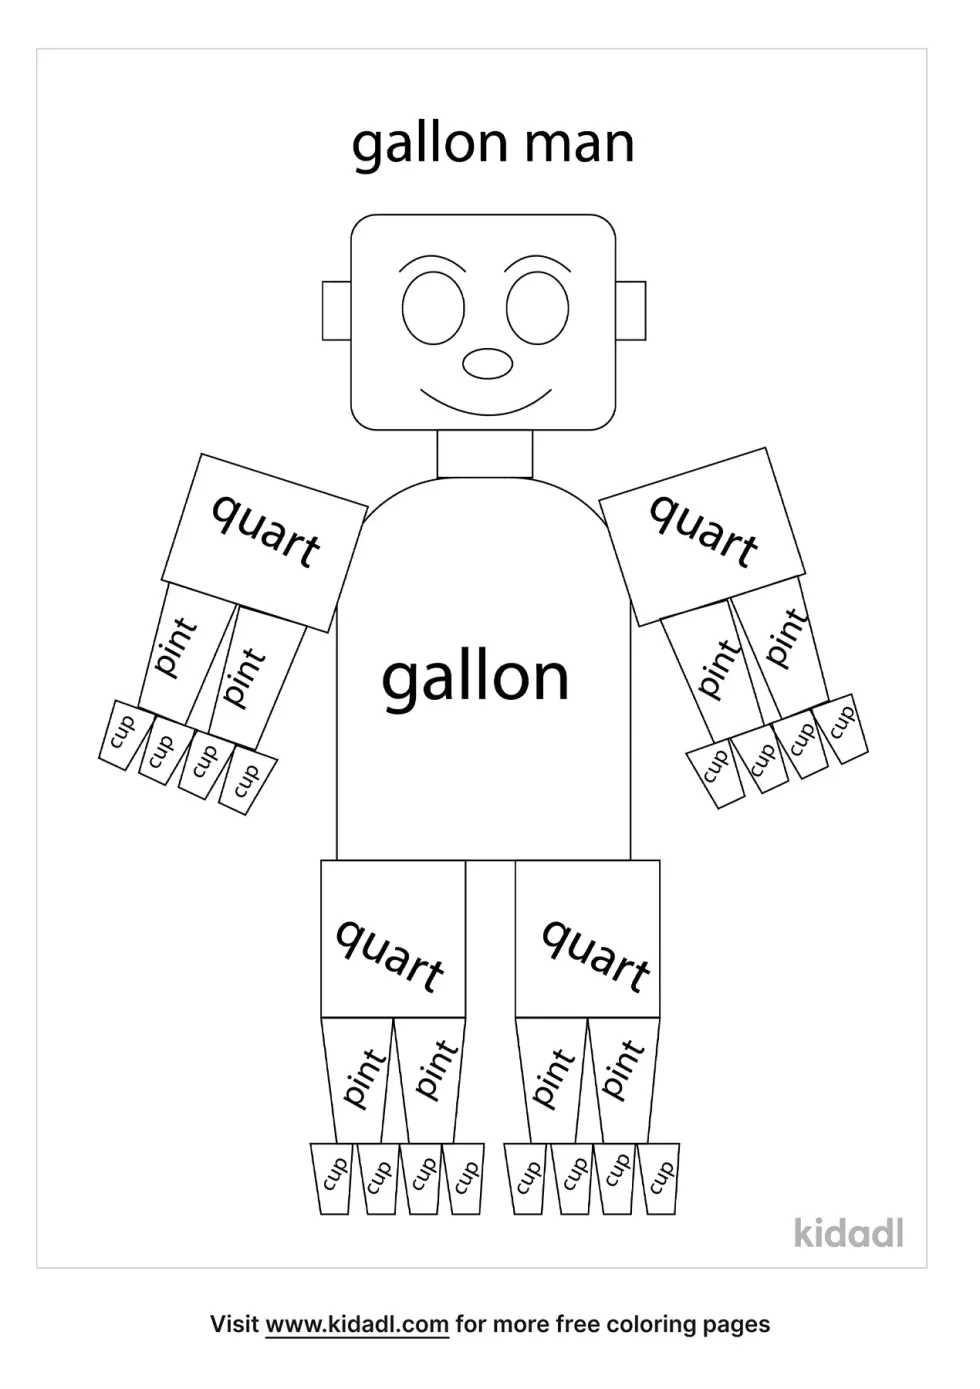 Gallon Man Coloring Page